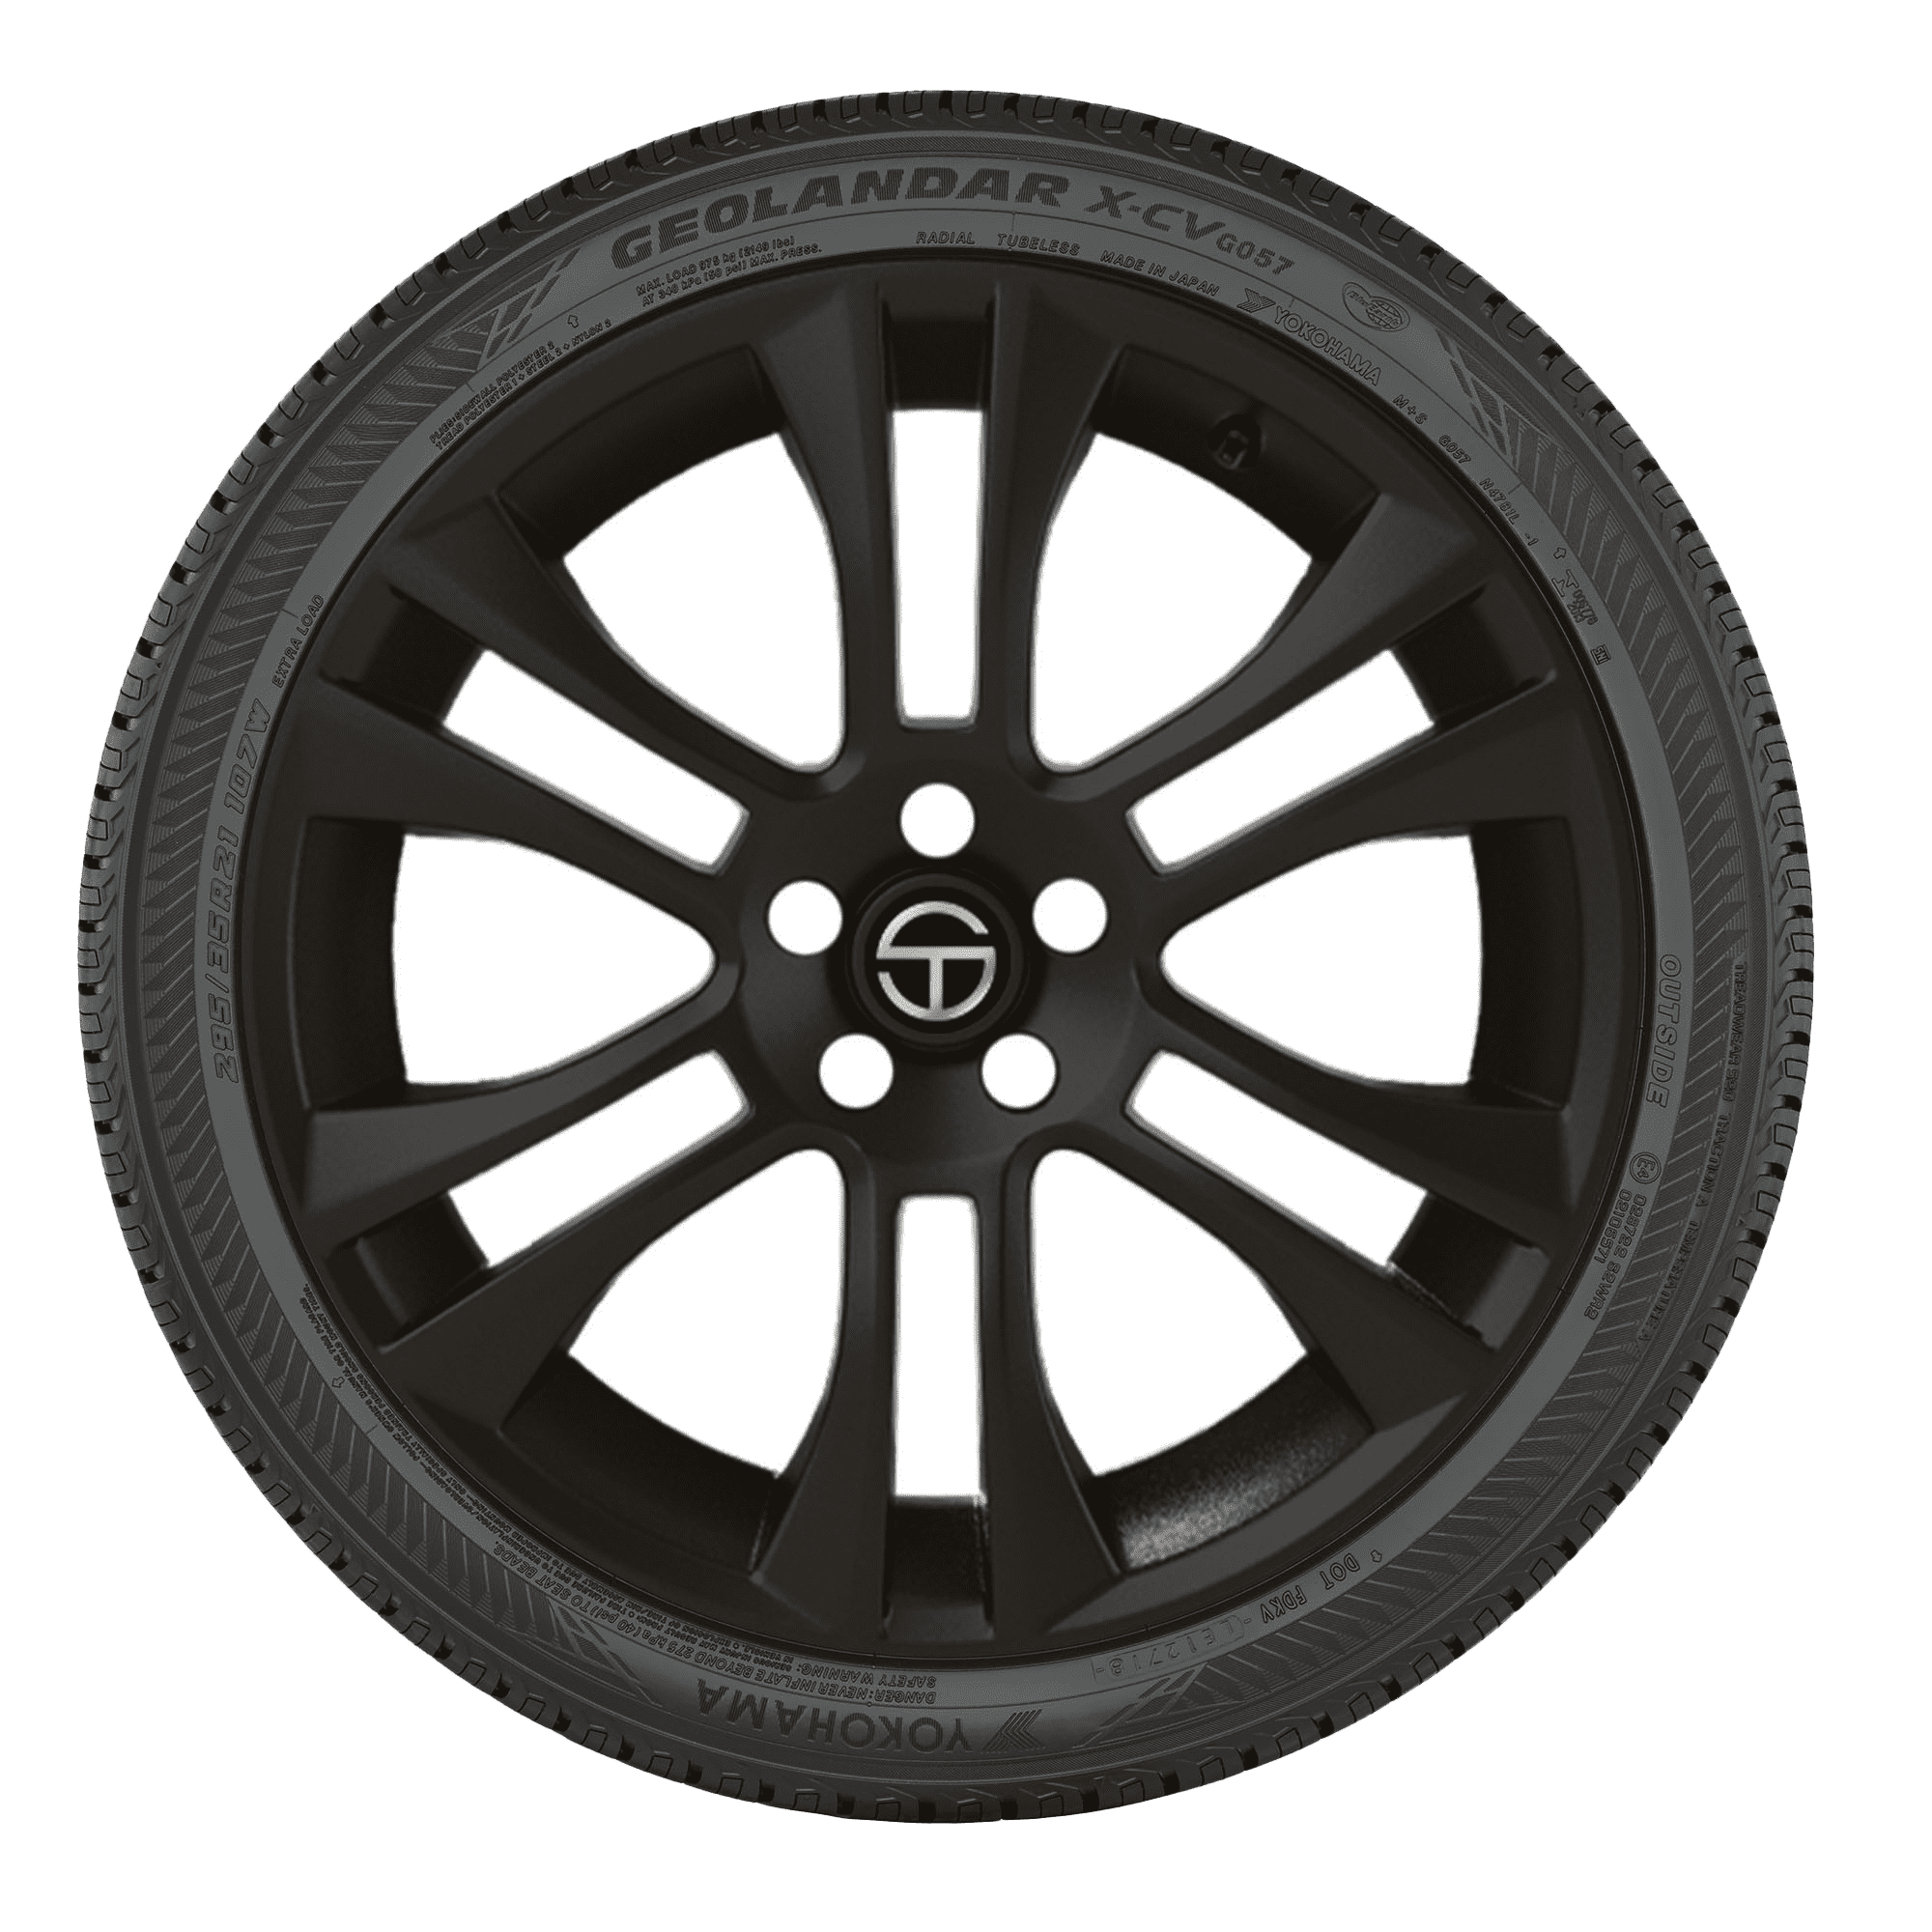 Buy Yokohama Geolandar X-CV G057 Tires Online | SimpleTire